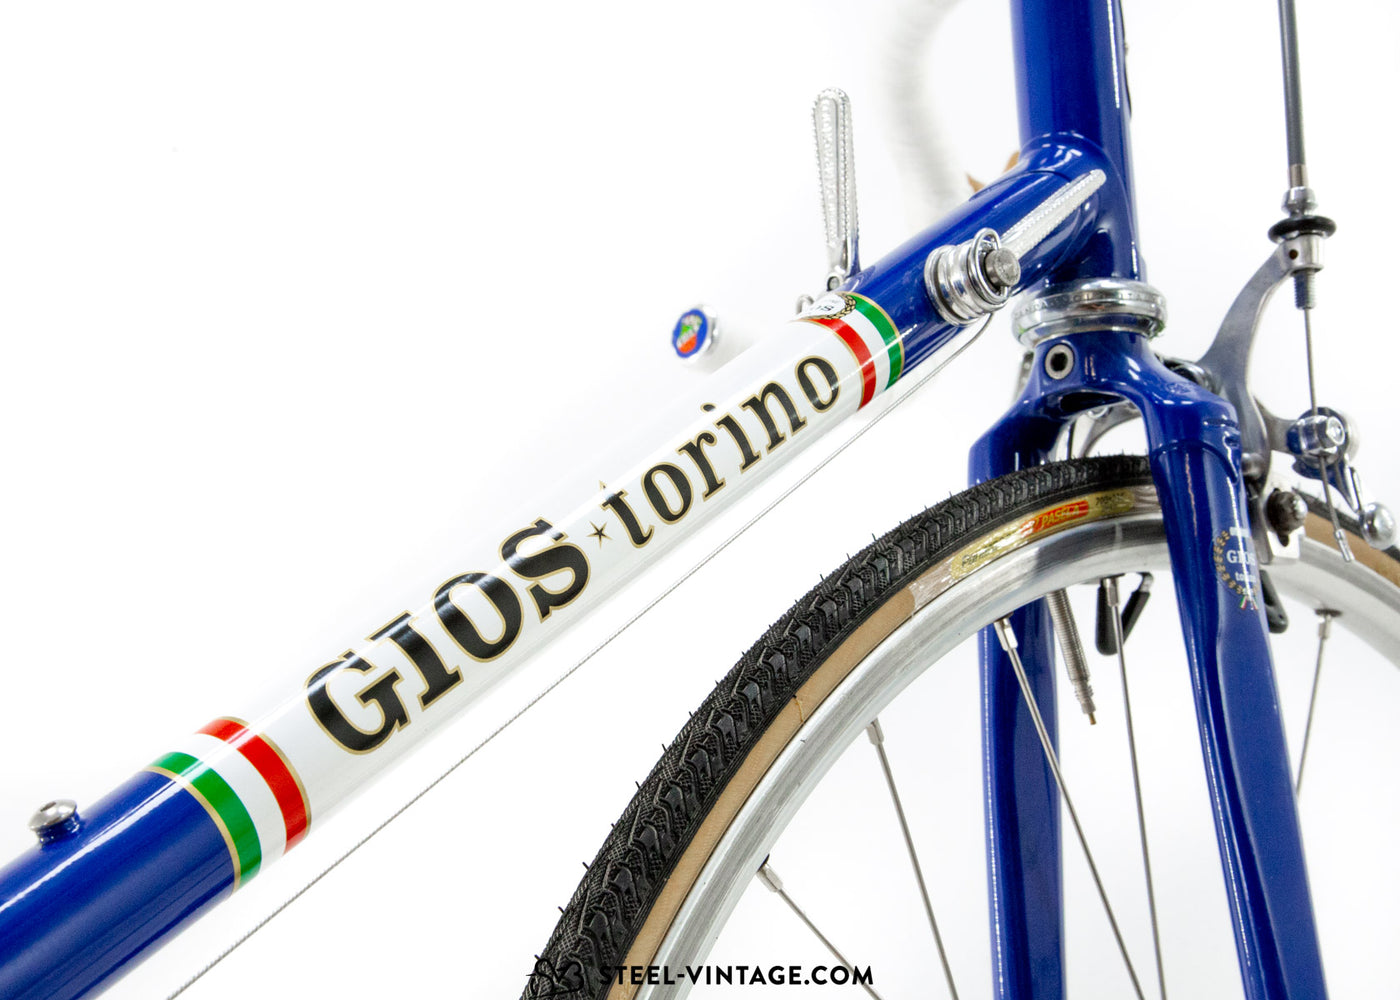 Gios Torino 专业公路自行车 1980 年代